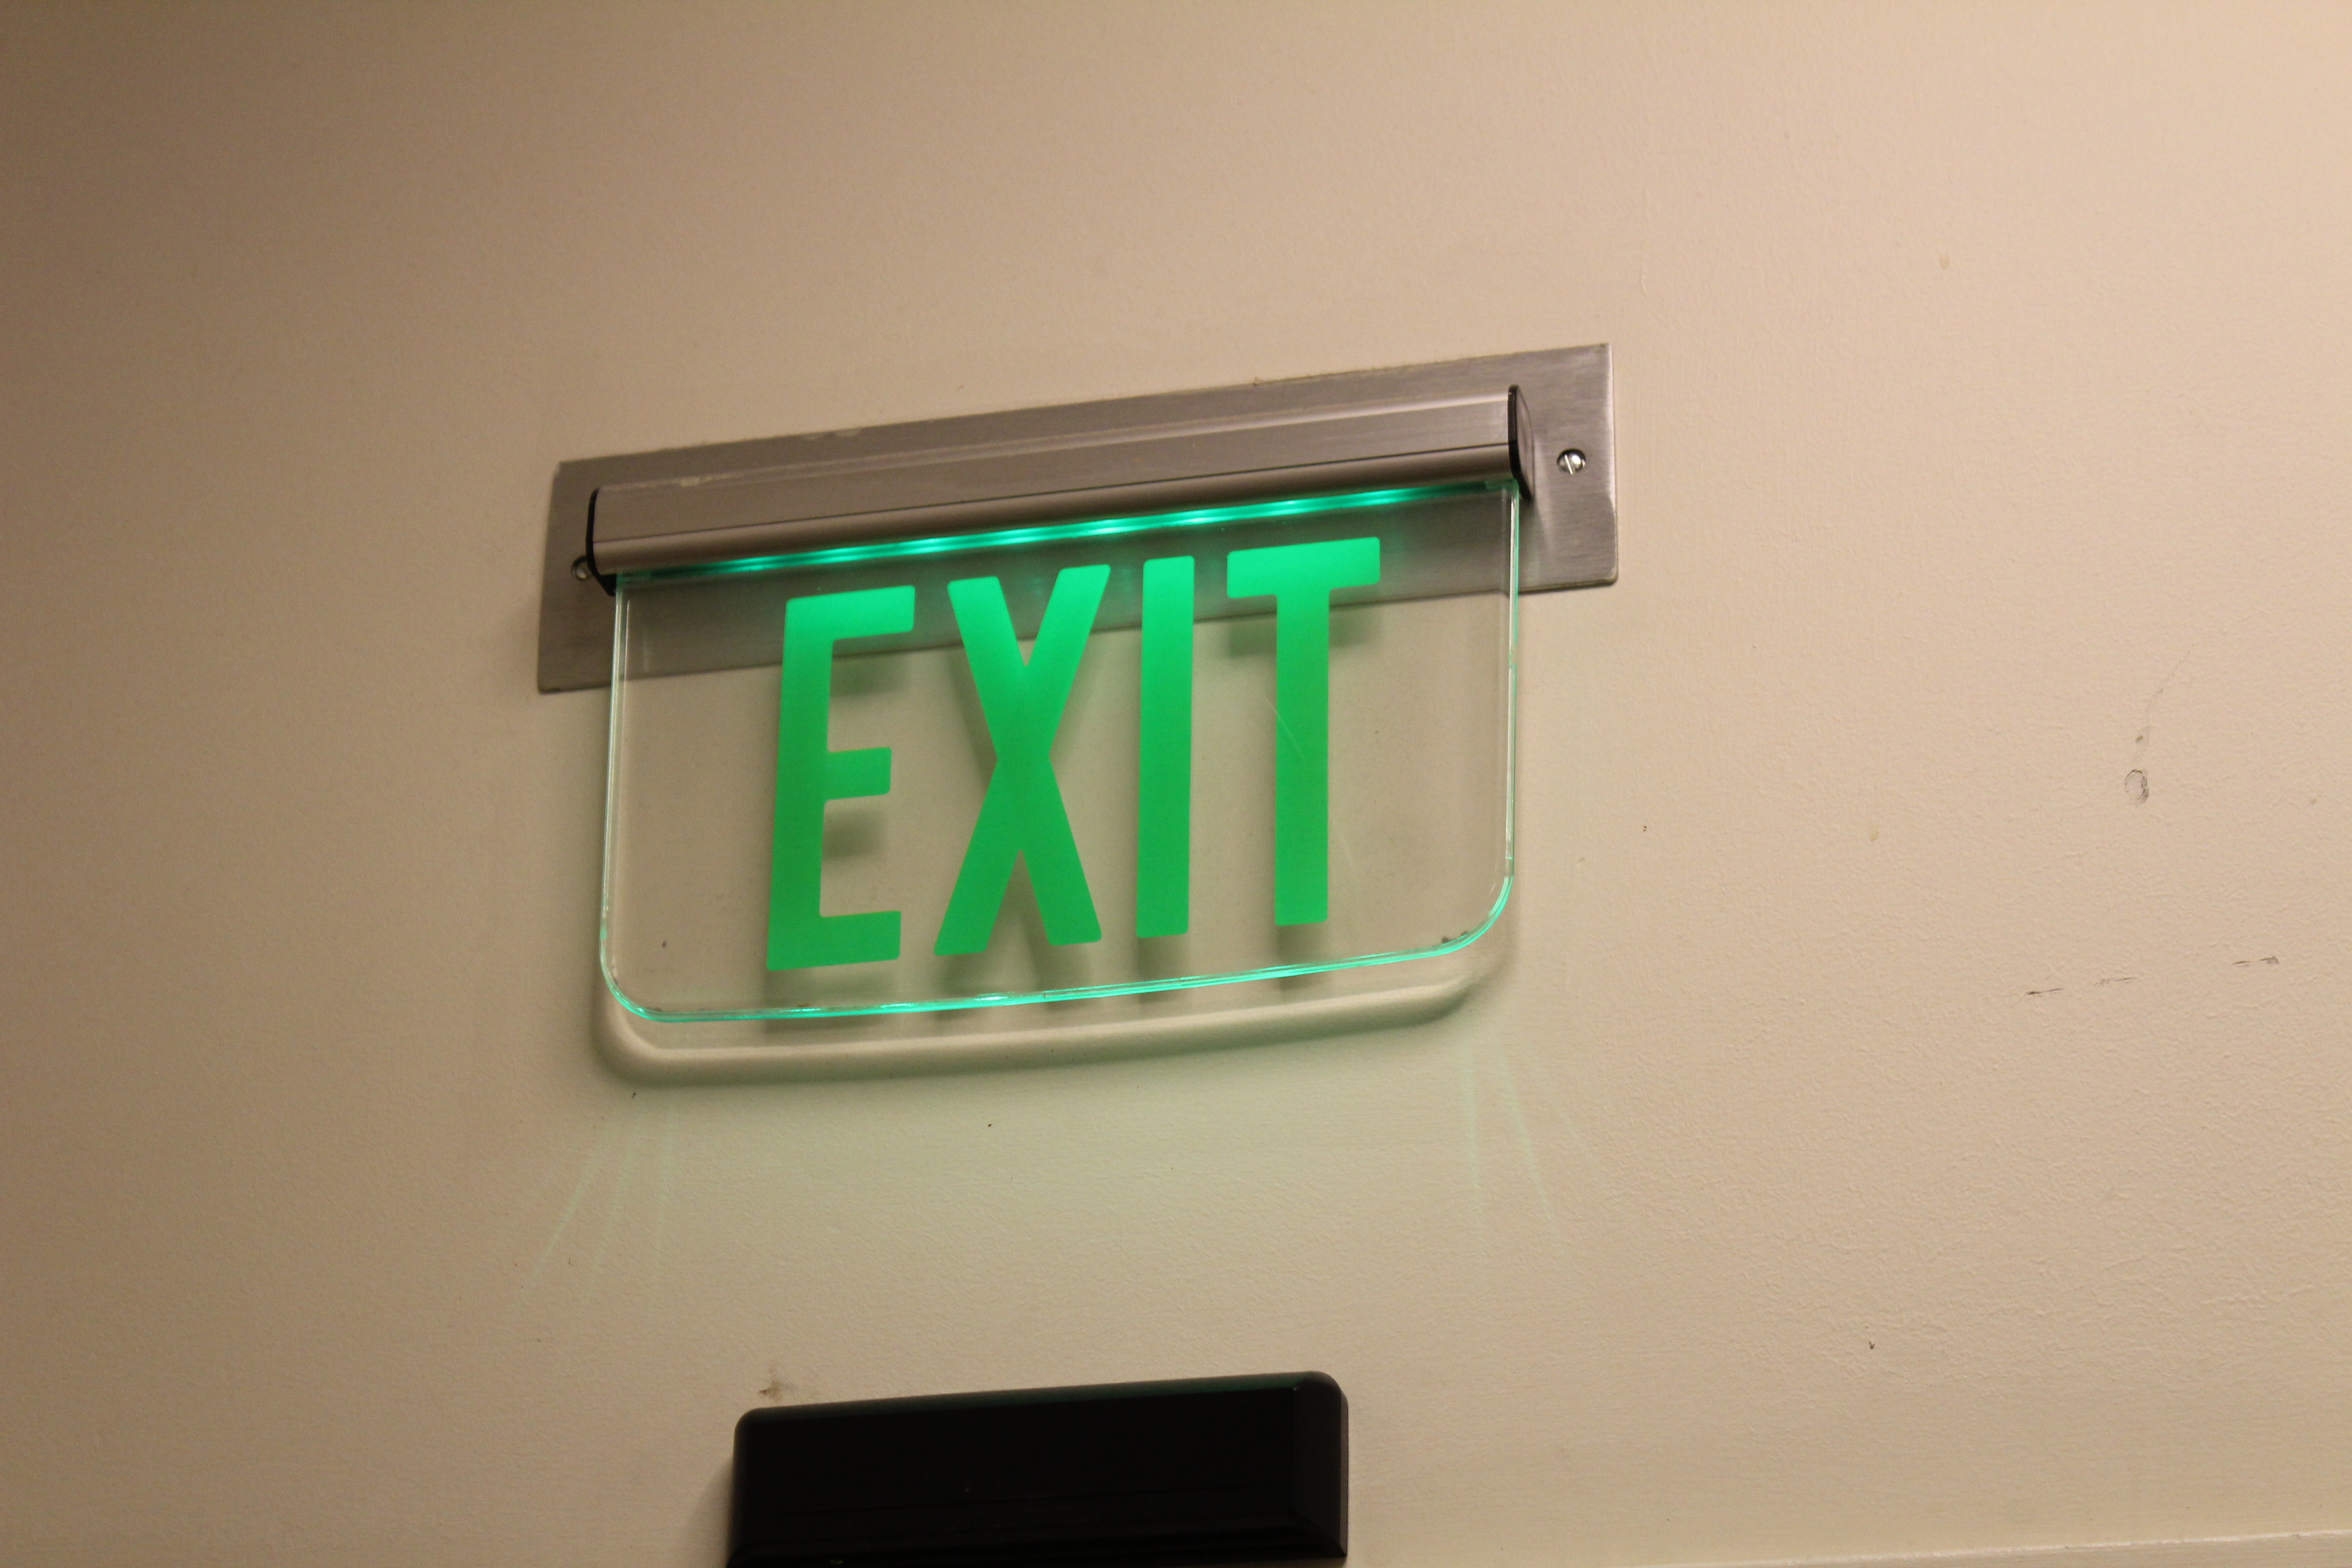 Press enter to exit